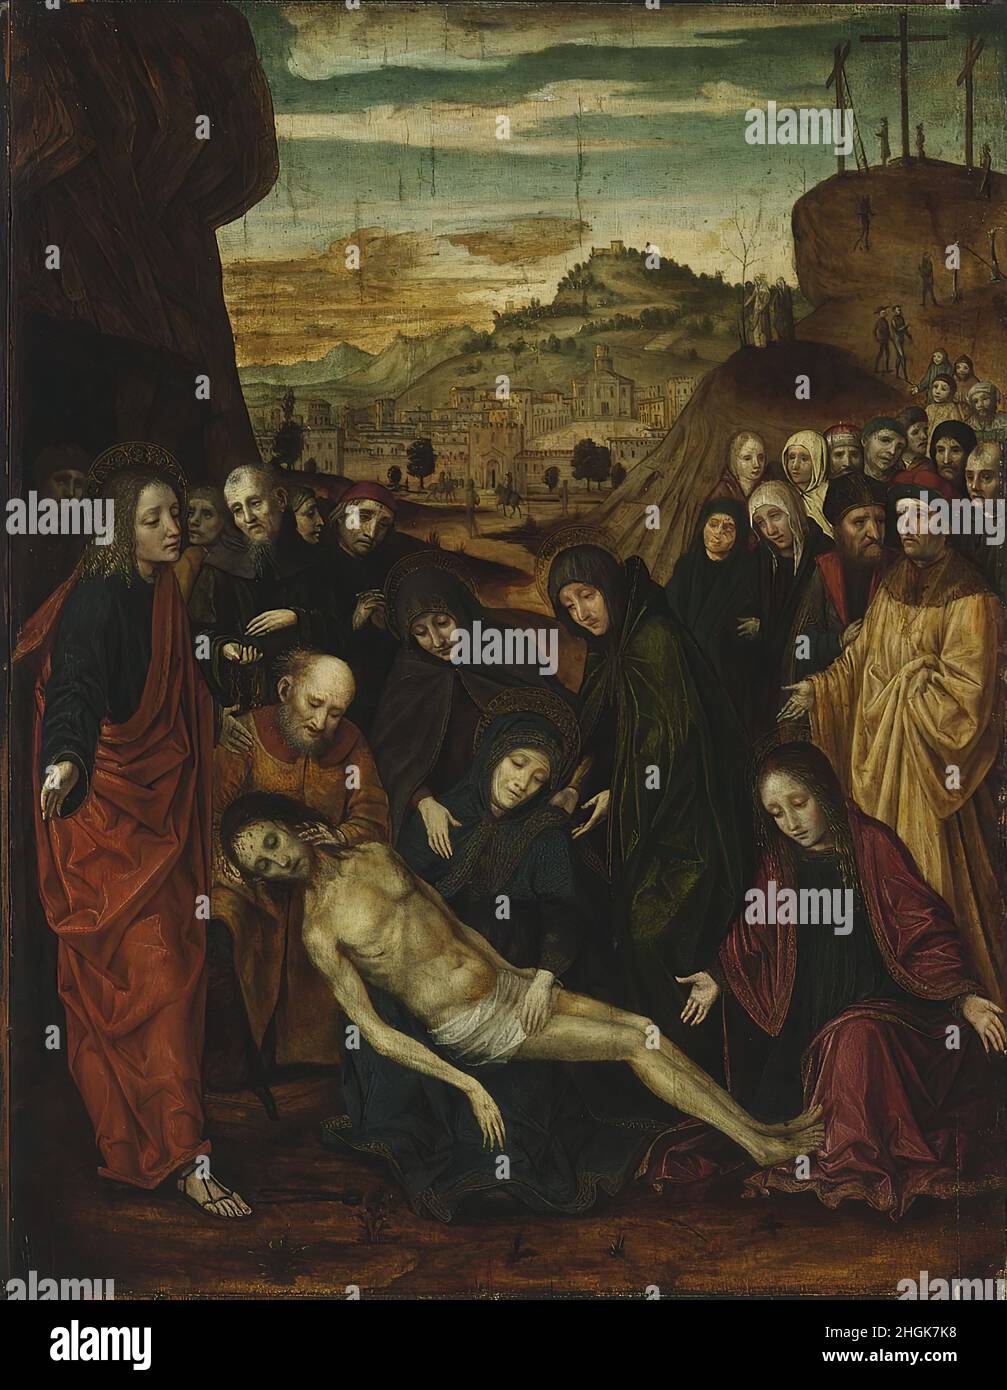 The lamentation of Christ - 1485c - tempera e oil on wood 64,7 x 49,3 cm - Da Fossano Ambrogio - Bergognone - Stock Photo